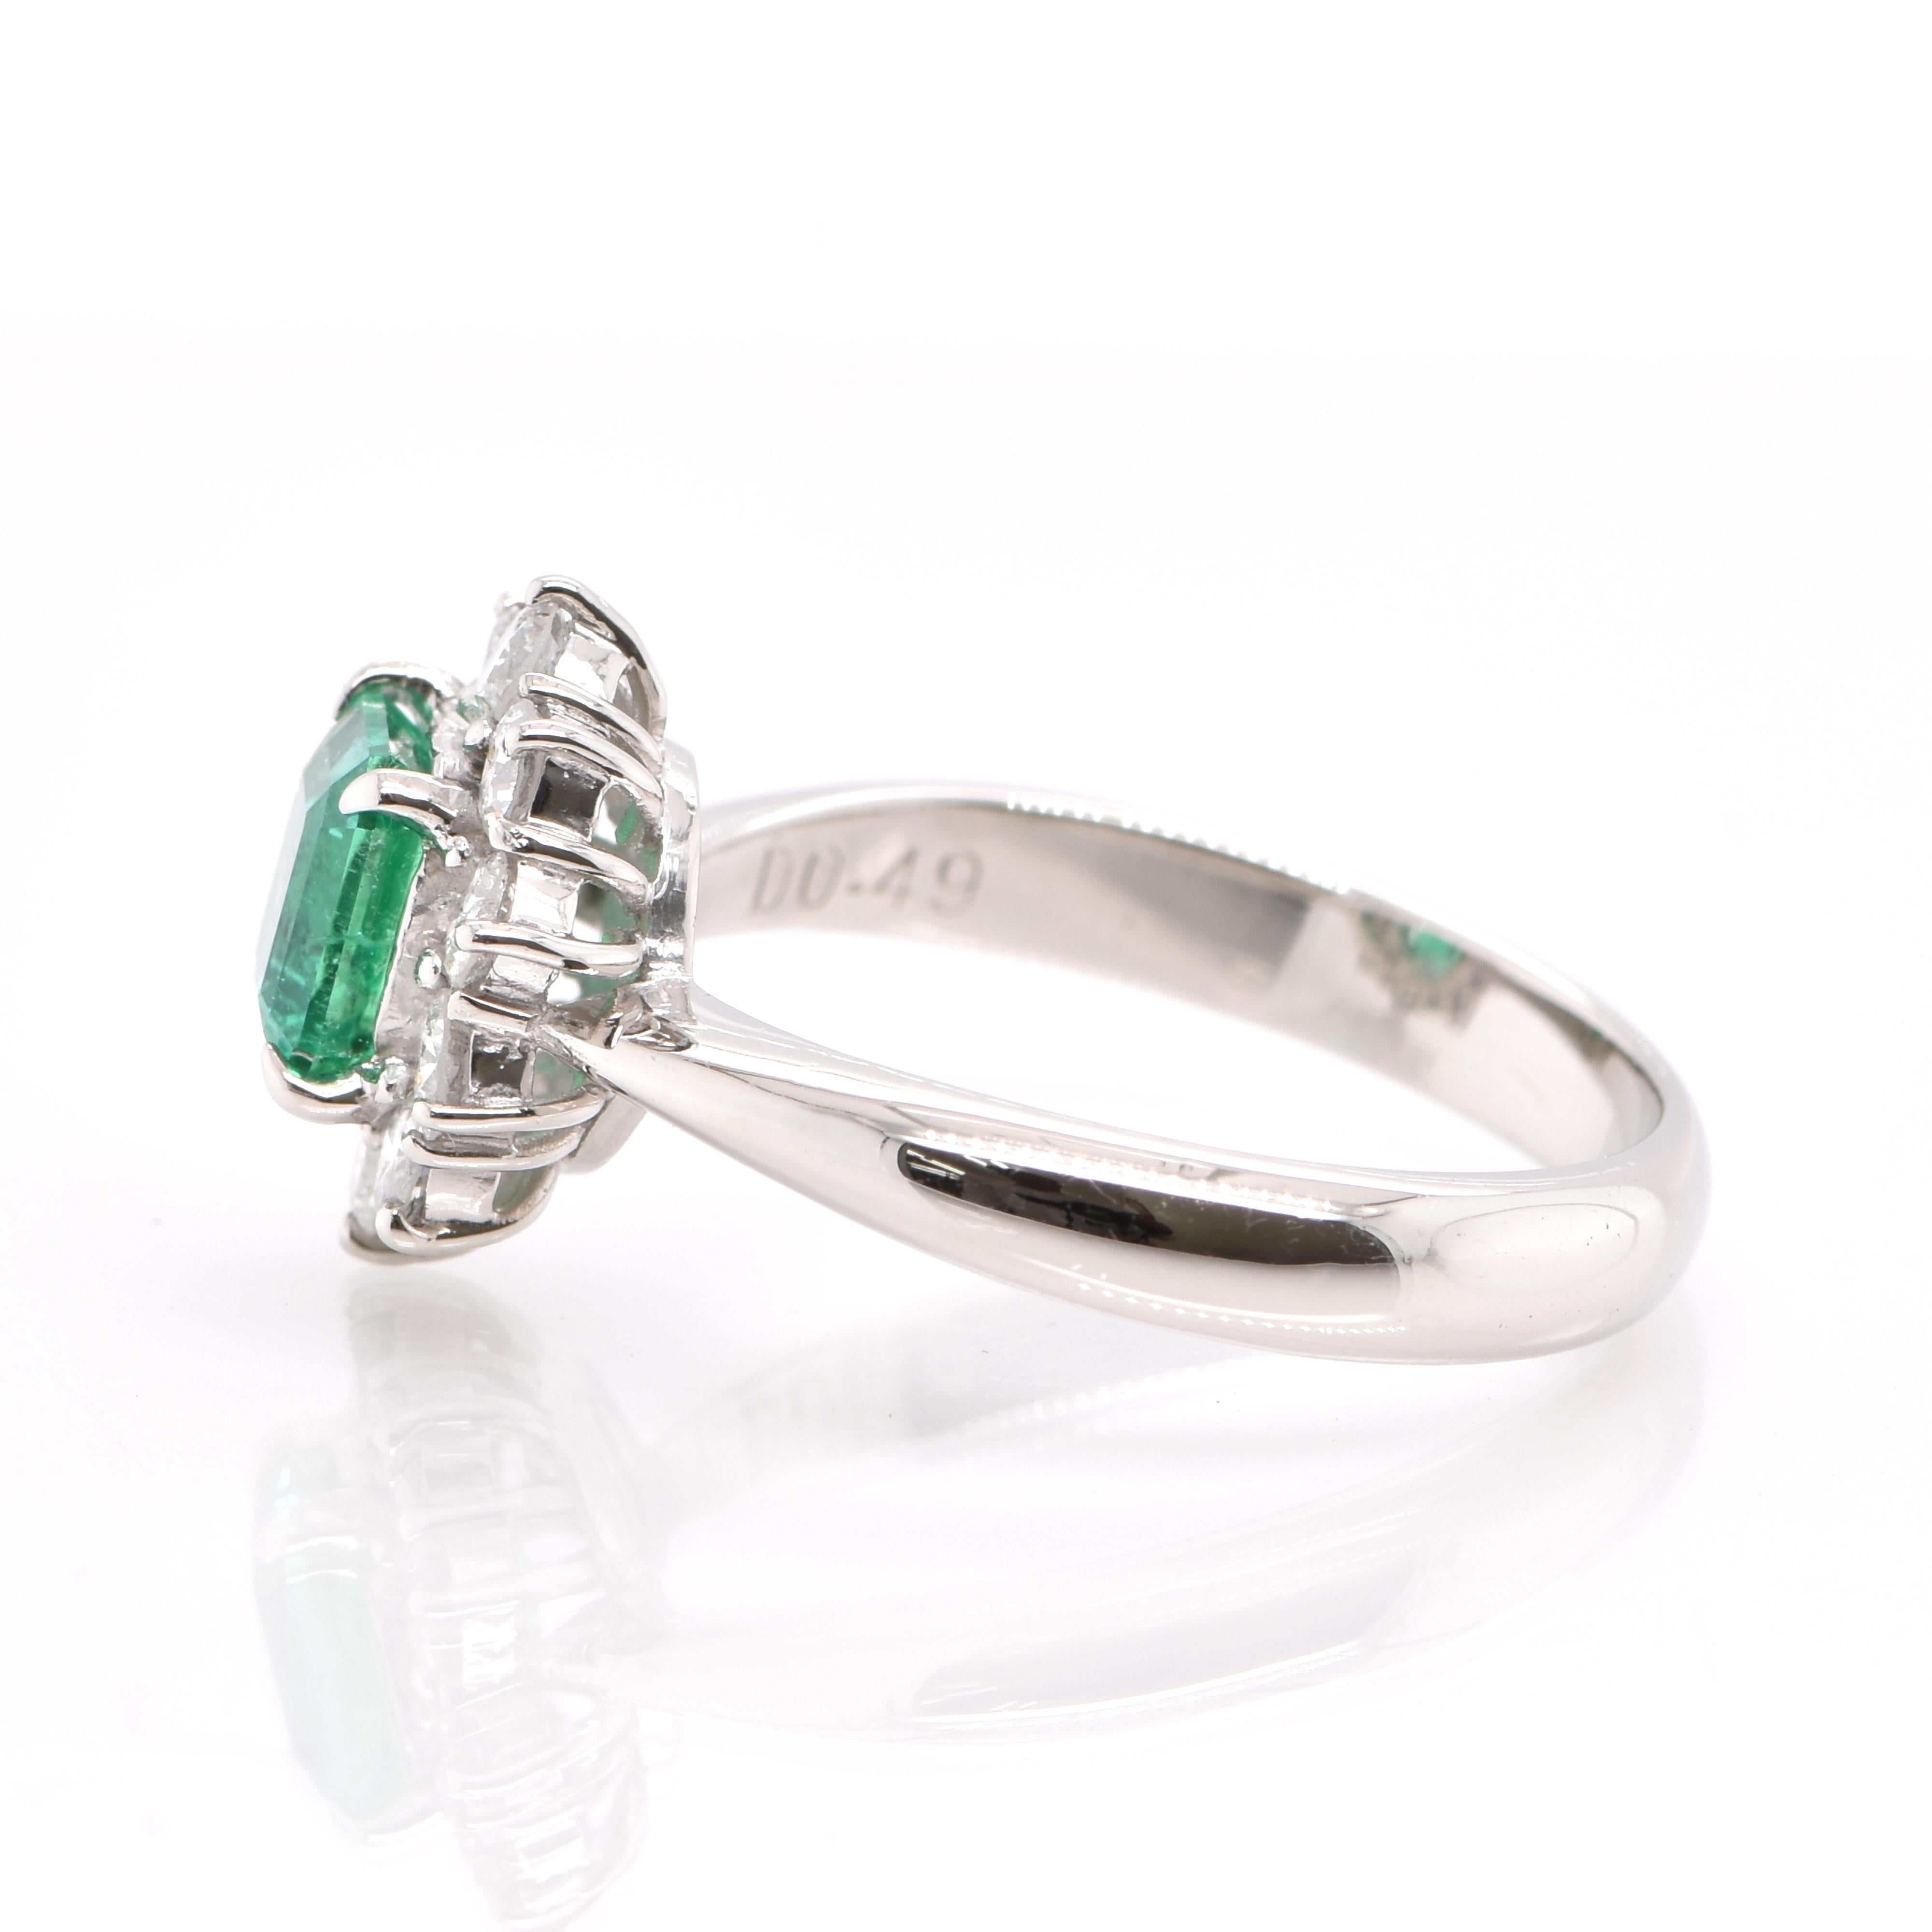 Emerald Cut 0.86 Carat Natural Emerald and Diamond Halo Ring Set in Platinum